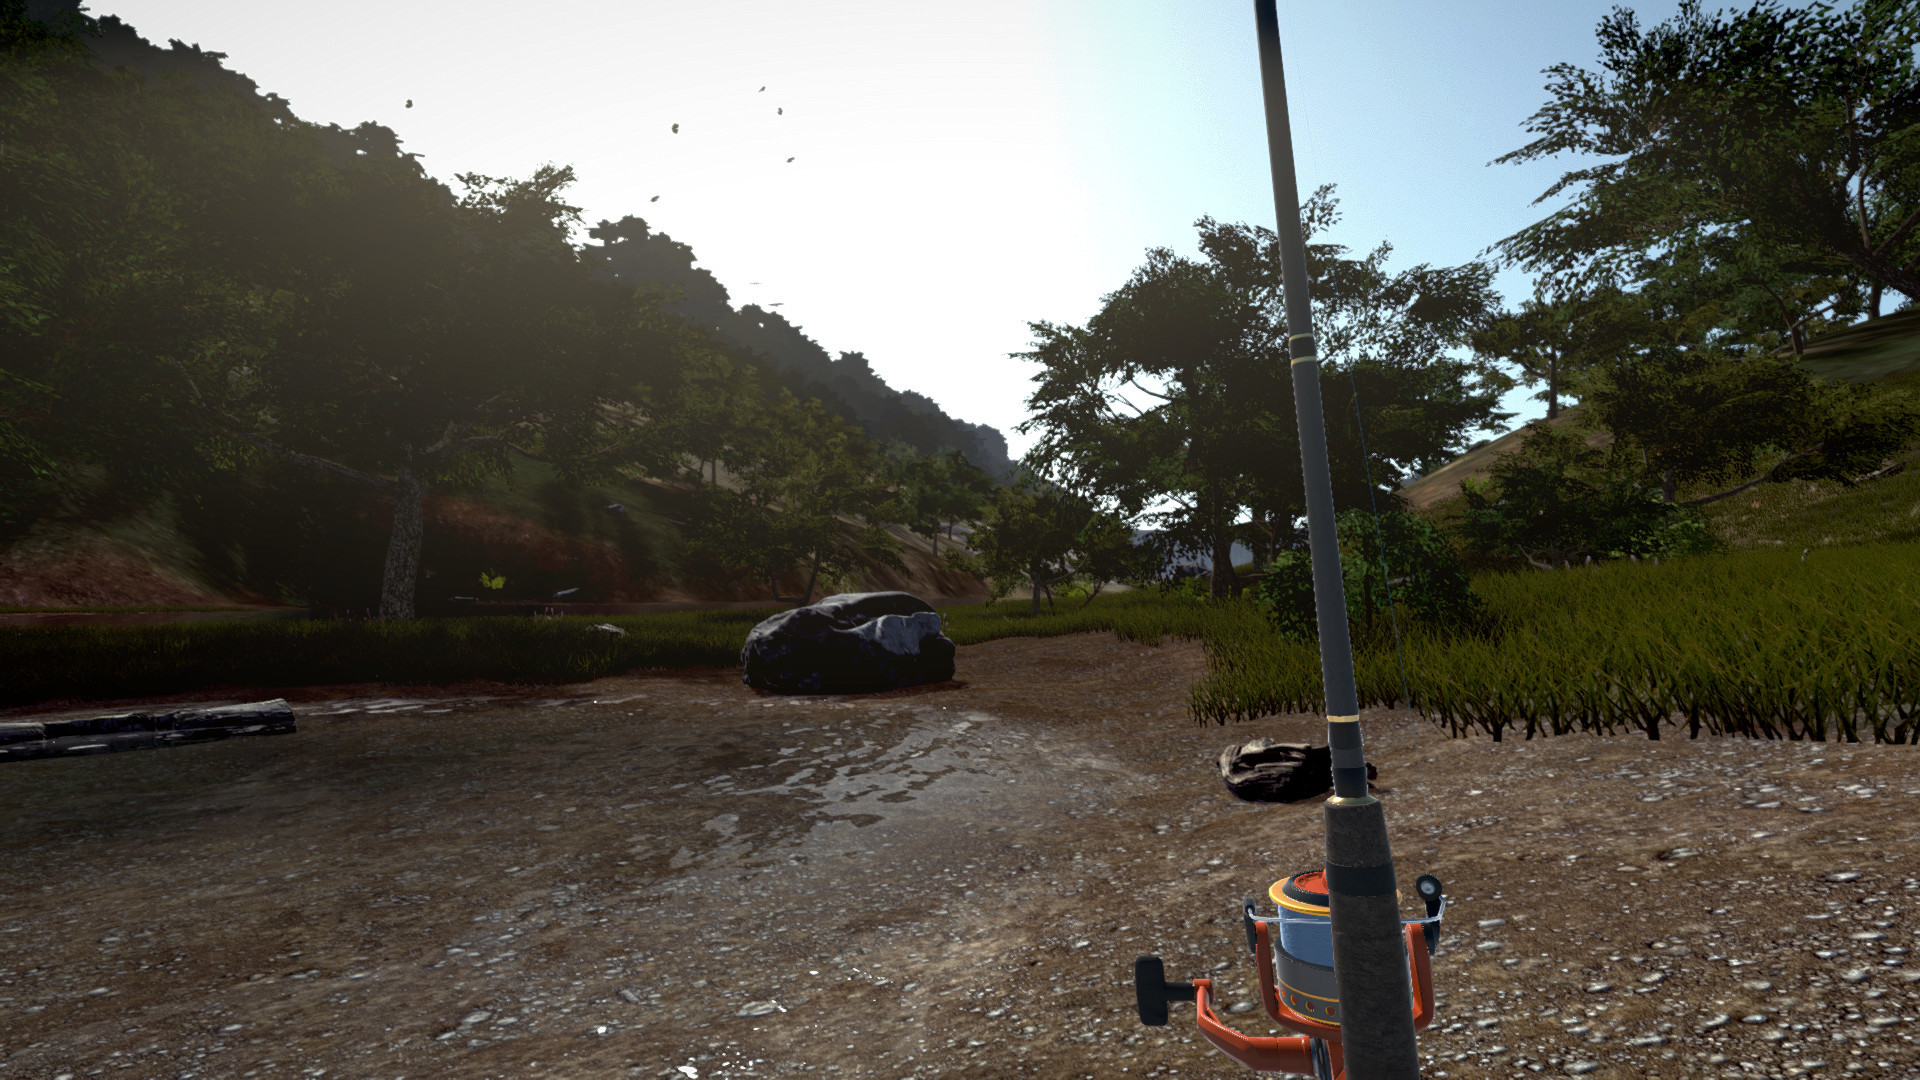 Ultimate Fishing Simulator VR - Kariba Dam DLC